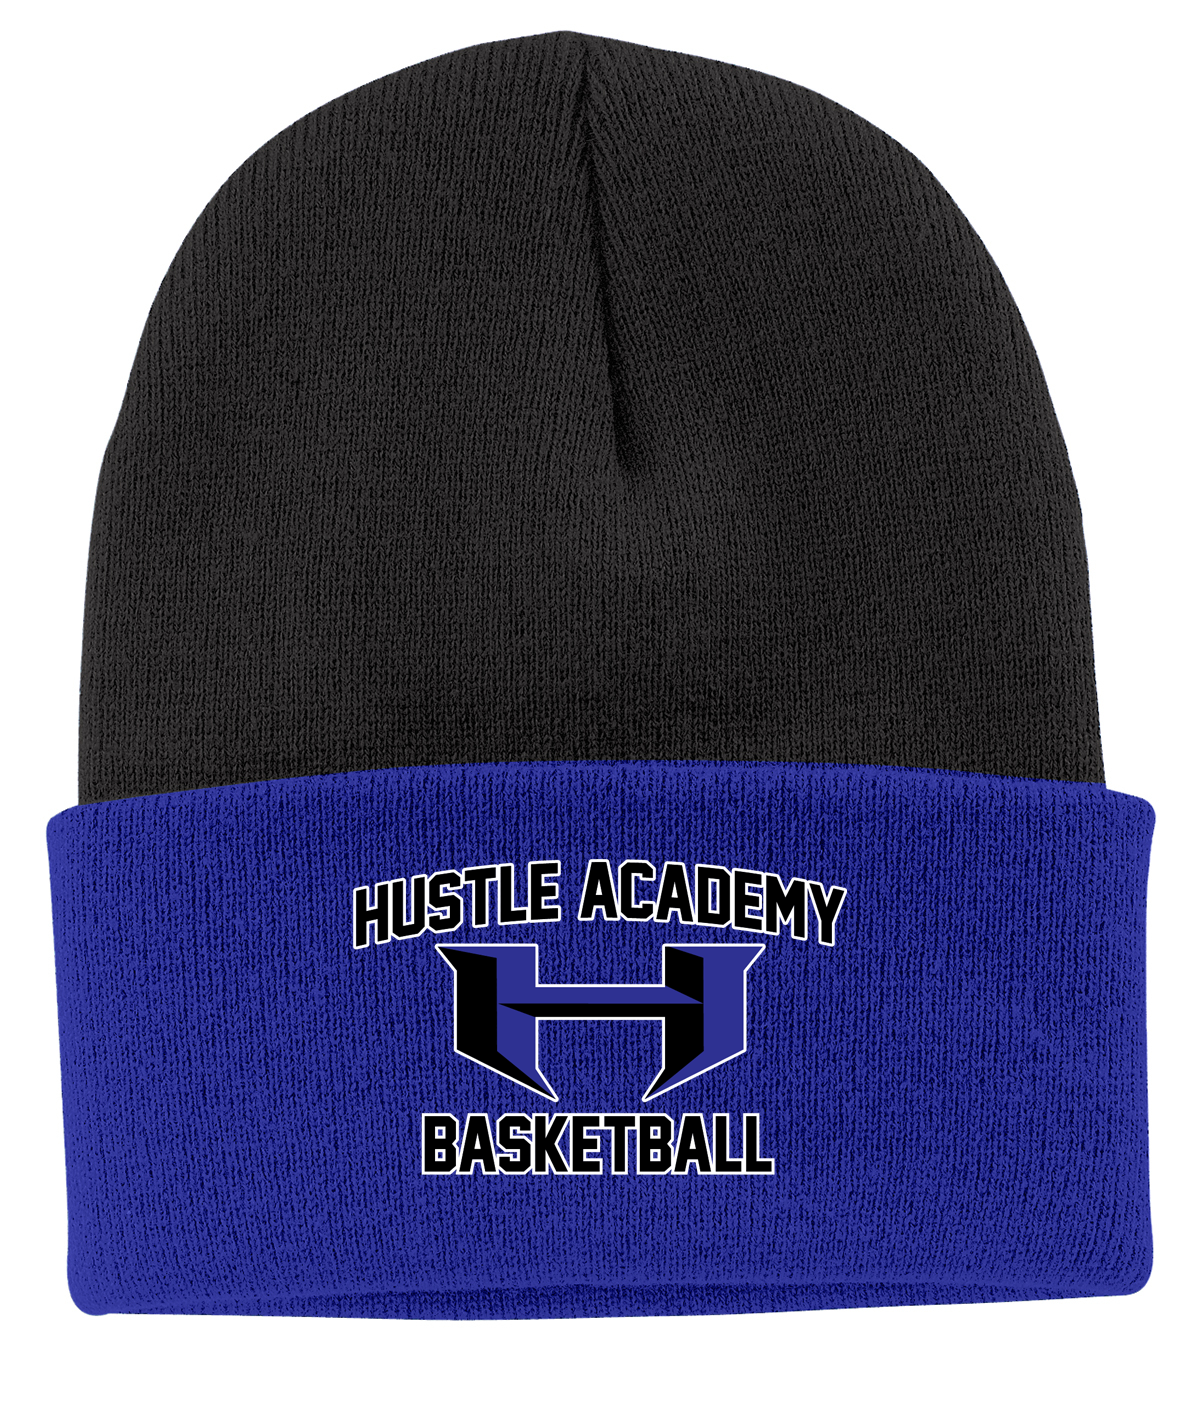 Hustle Academy Basketball Knit Beanie